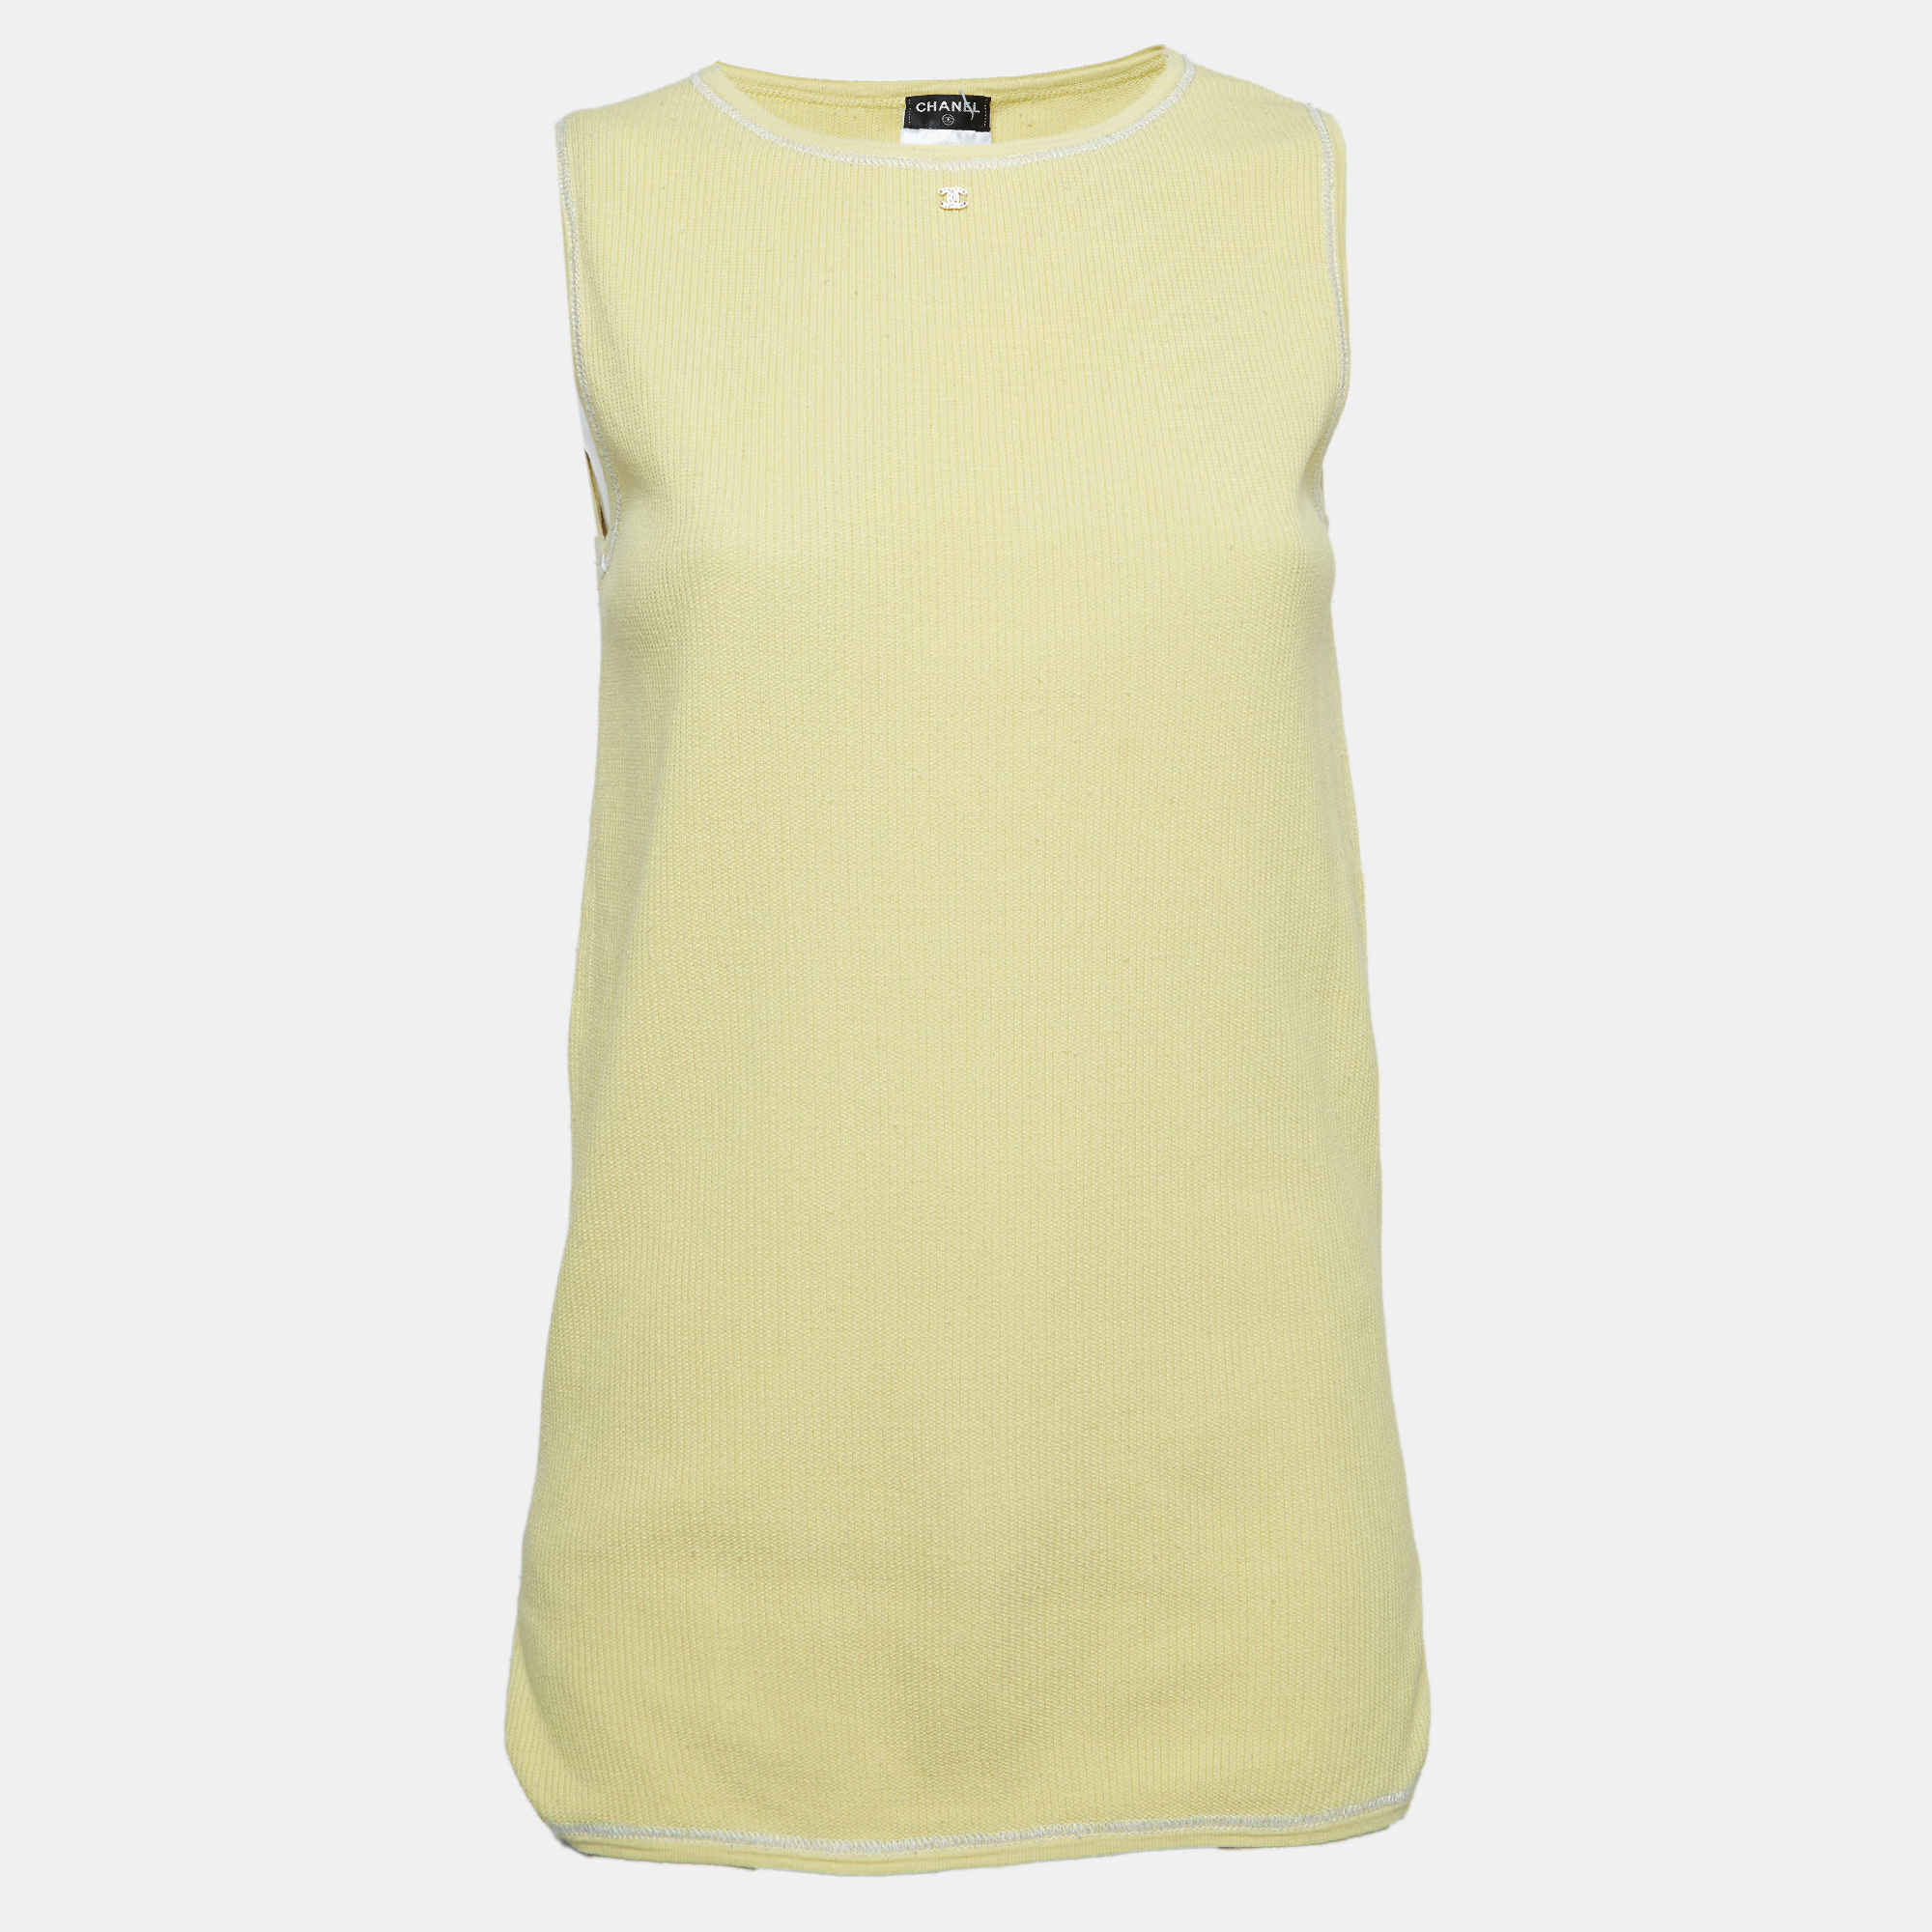 

Chanel Yellow Knit Logo Sleeveless Top L